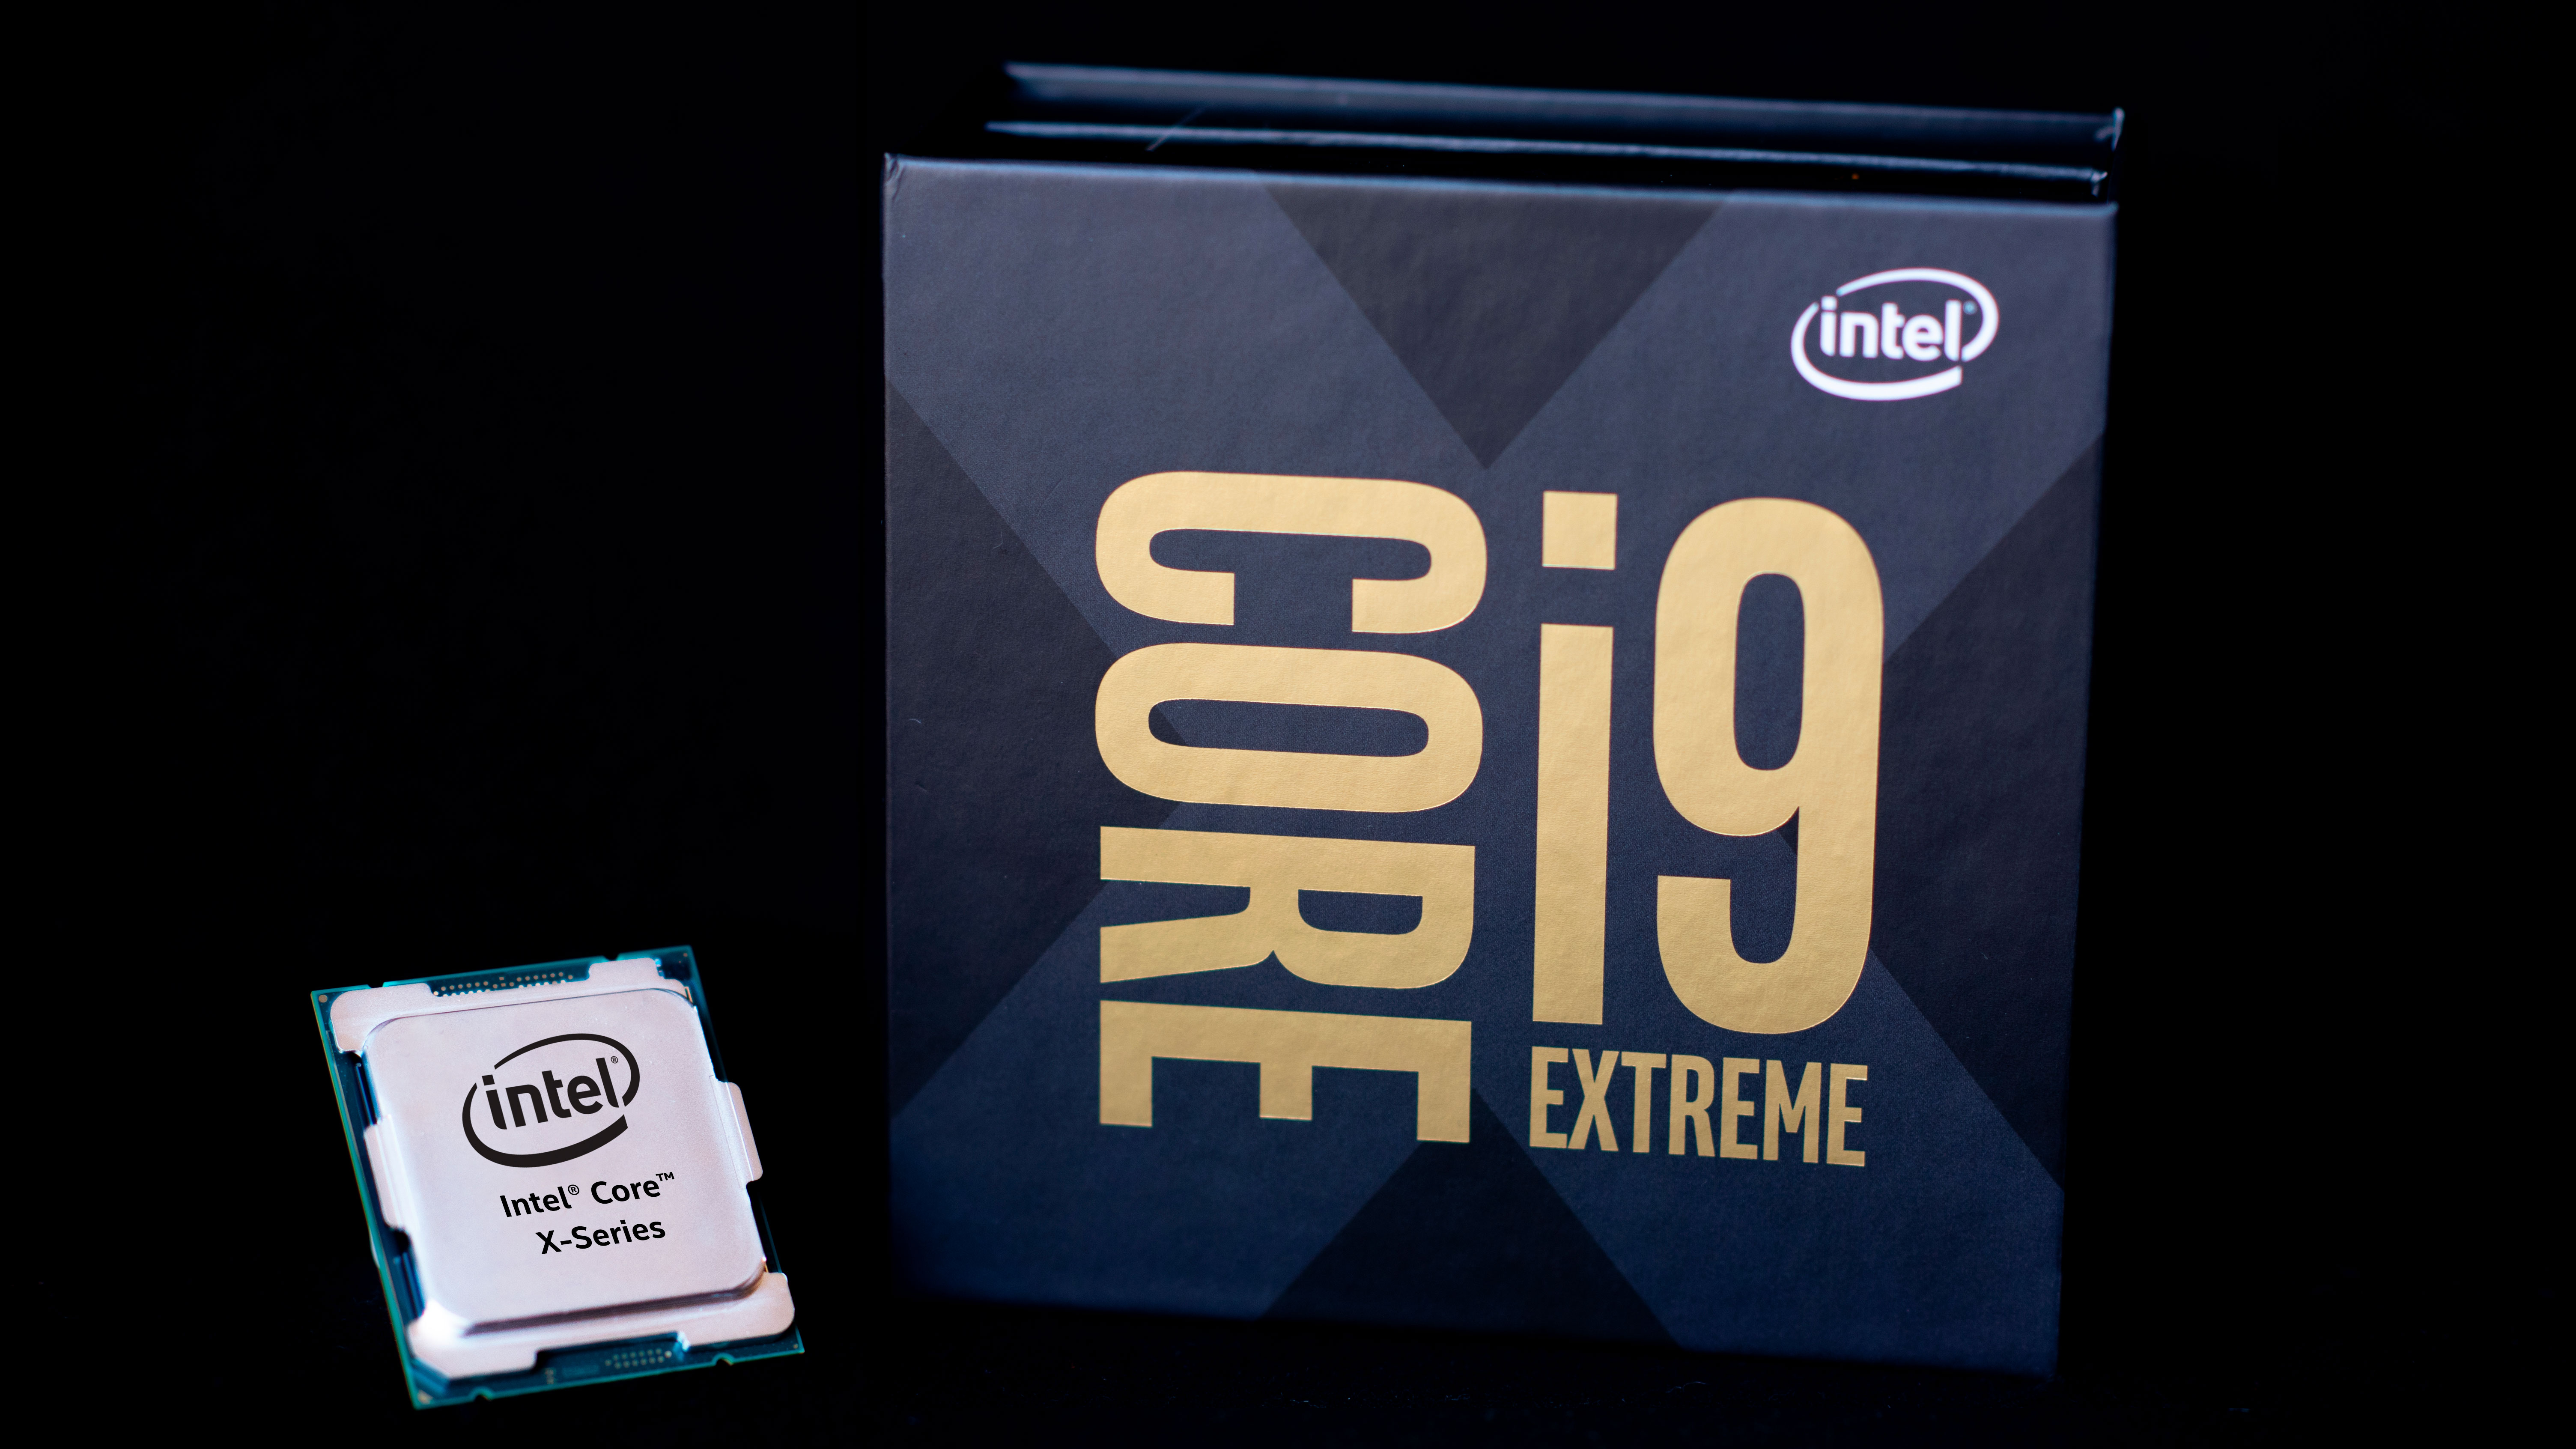 Intel 10 series. Процессор Intel Core i9. Процессор Intel Core i9-10980xe Box. Процессор Intel Core i9-10980xe extreme Edition. Intel Core i9 extreme x-Series Edition.